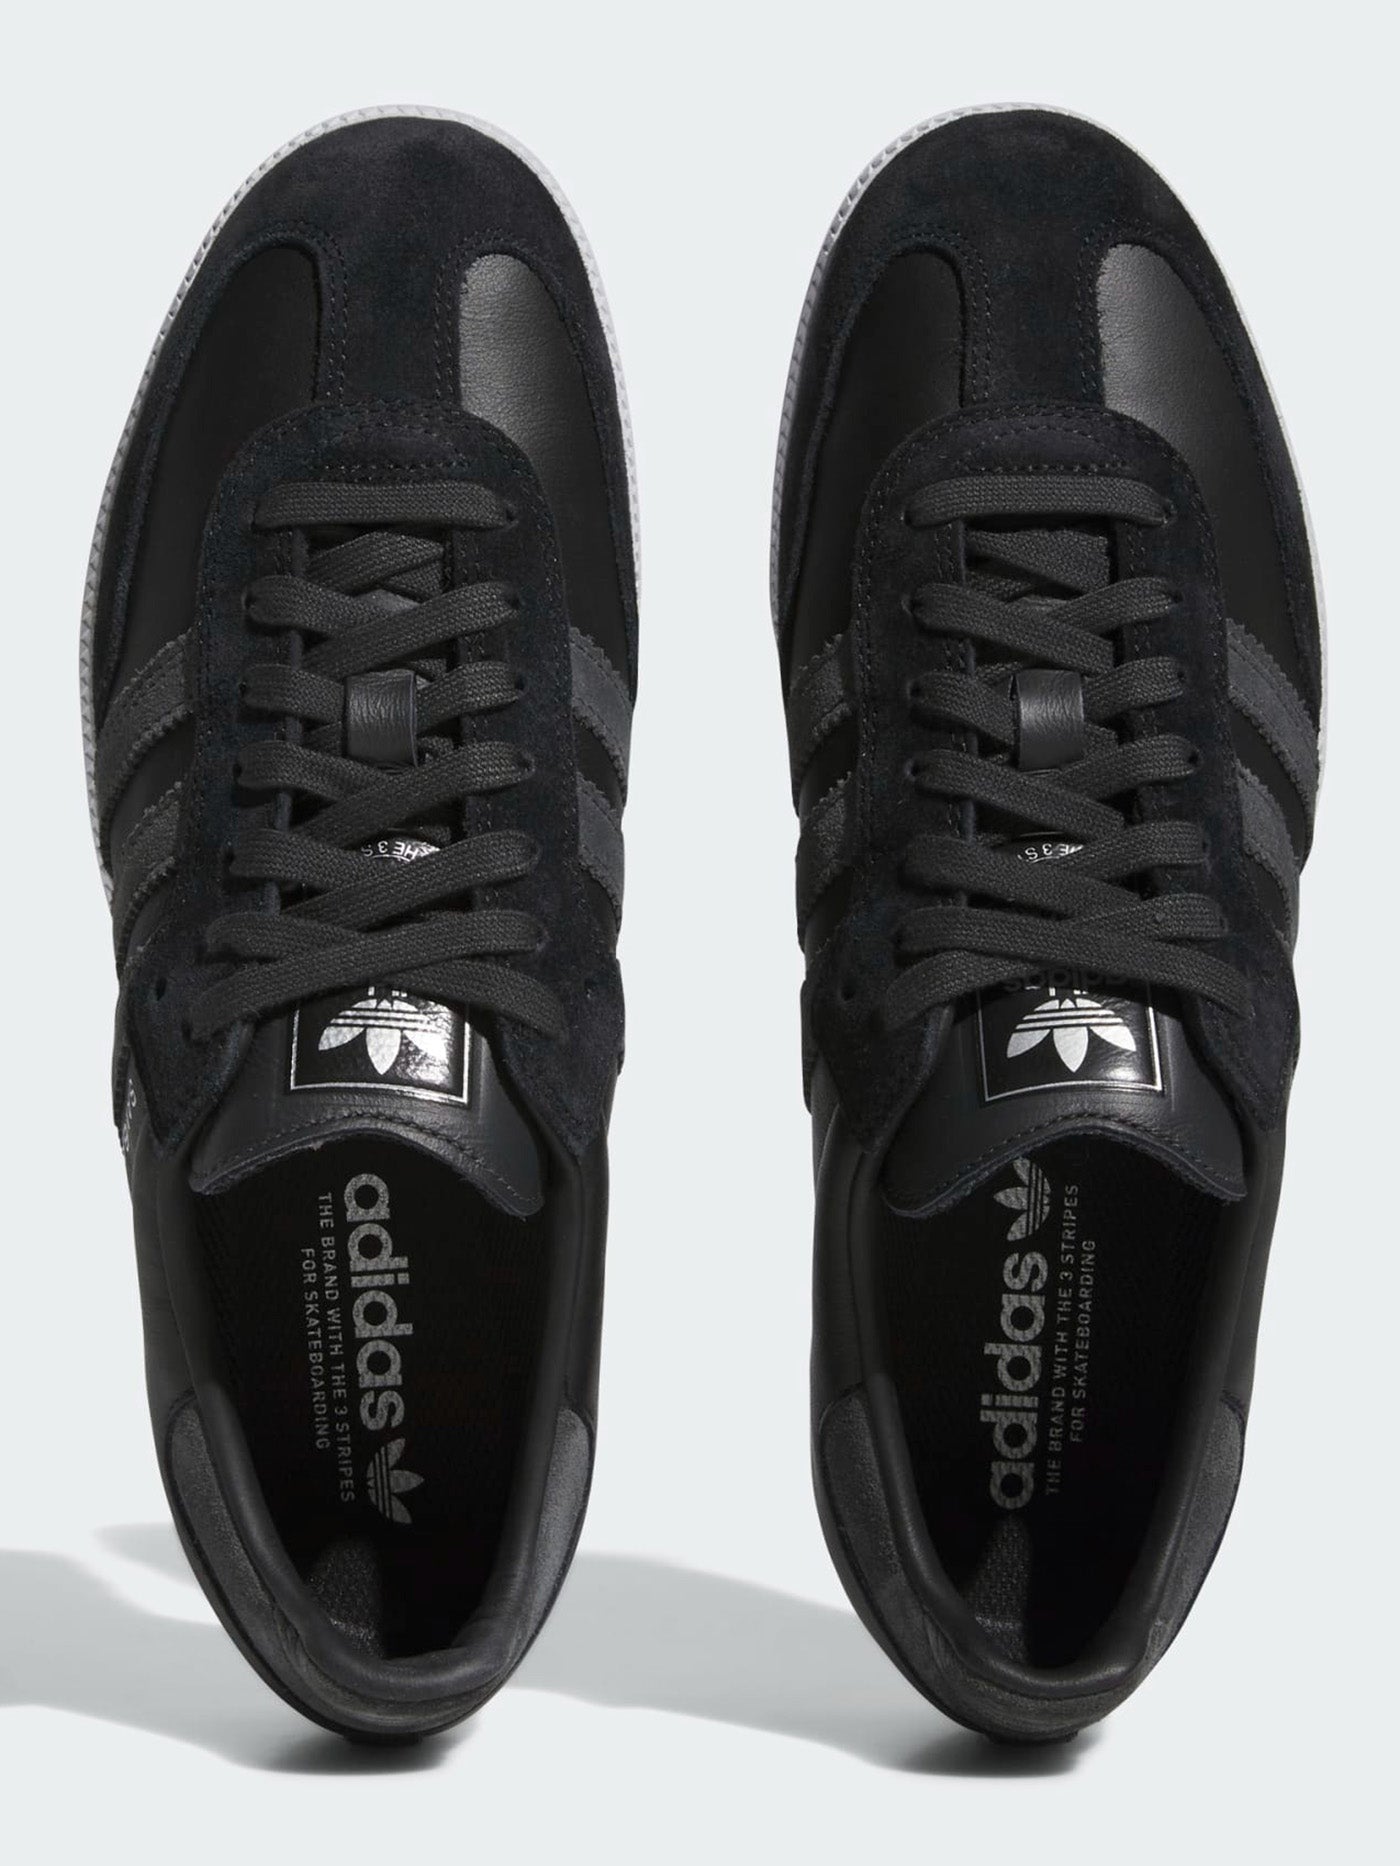 Adidas Fall 2023 Samba ADV Core Black/Carbon/Silver Shoes